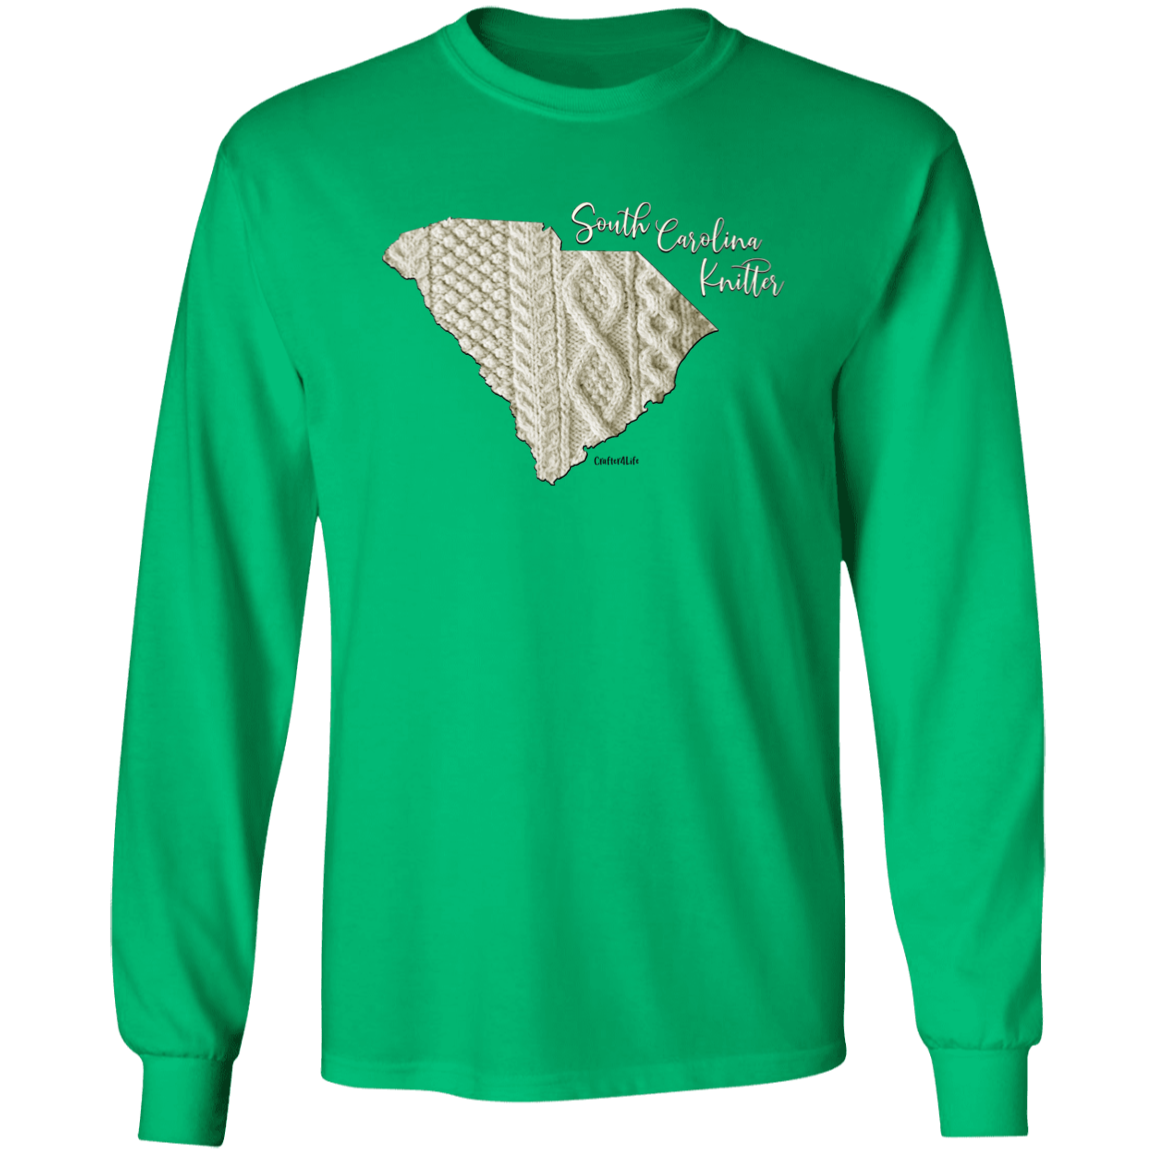 South Carolina Knitter LS Ultra Cotton T-Shirt